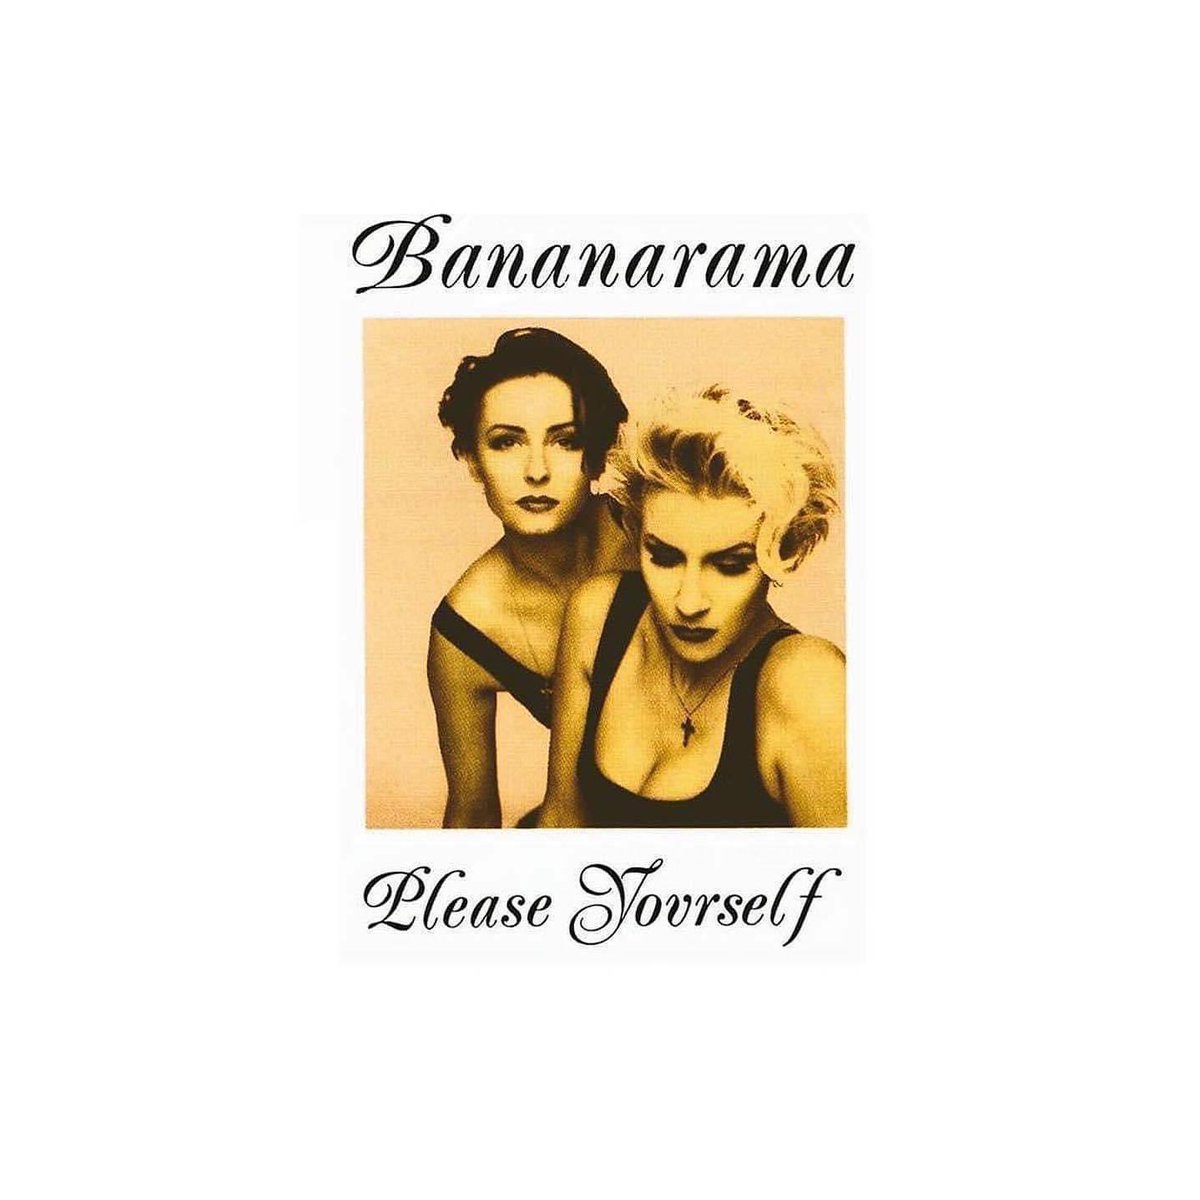 Happy anniversary to Bananarama’s album, ‘Please Yourself’. Released this week in 1993. #bananarama #pleaseyourself #movinon #lastthingonmymind #moremoremore #saradallin #kerenwoodward 🍌🍌🍌